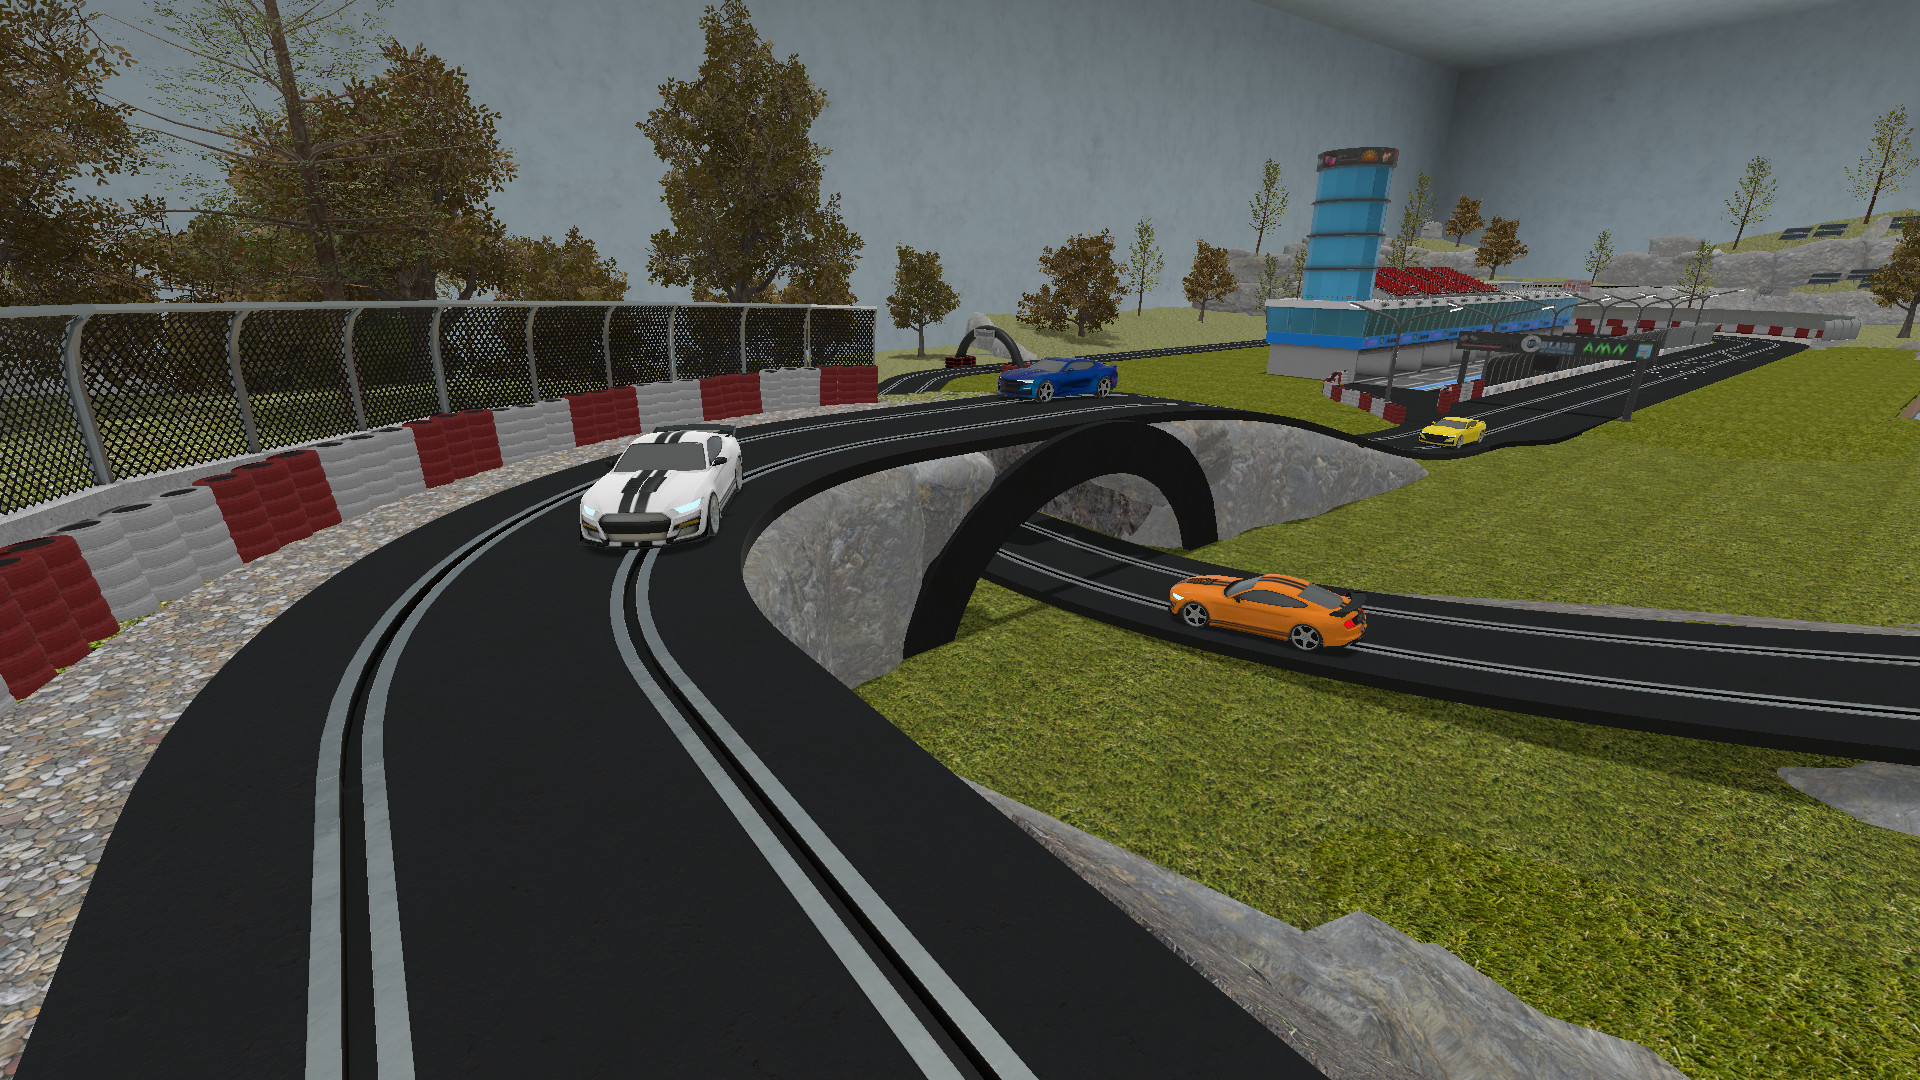 Slotracers VR screenshot